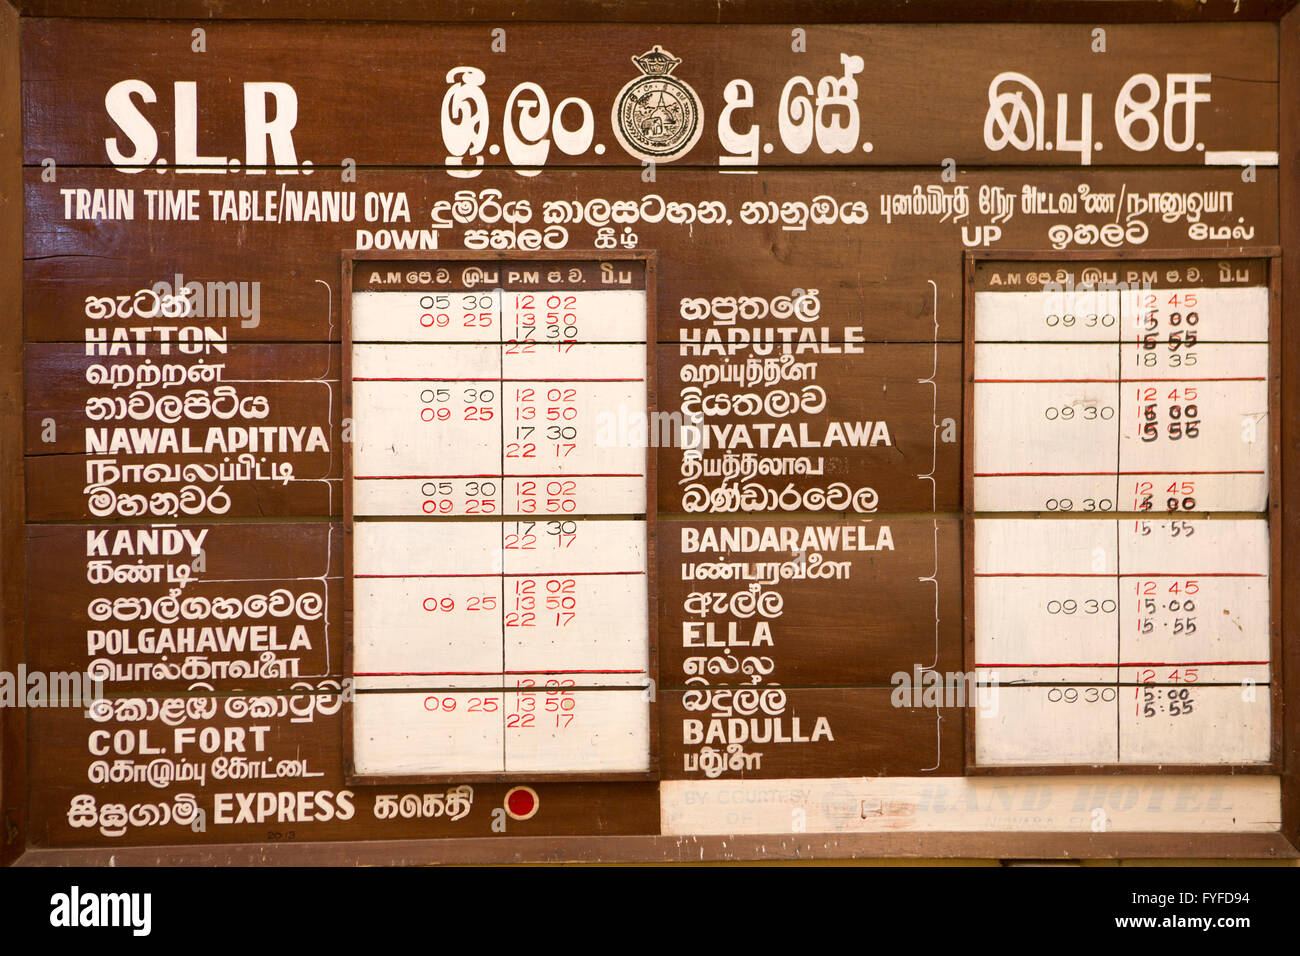 Sri Lanka, Nuwara Eliya, Nanu Oya Railway Station, up and down line timetable sign Stock Photo